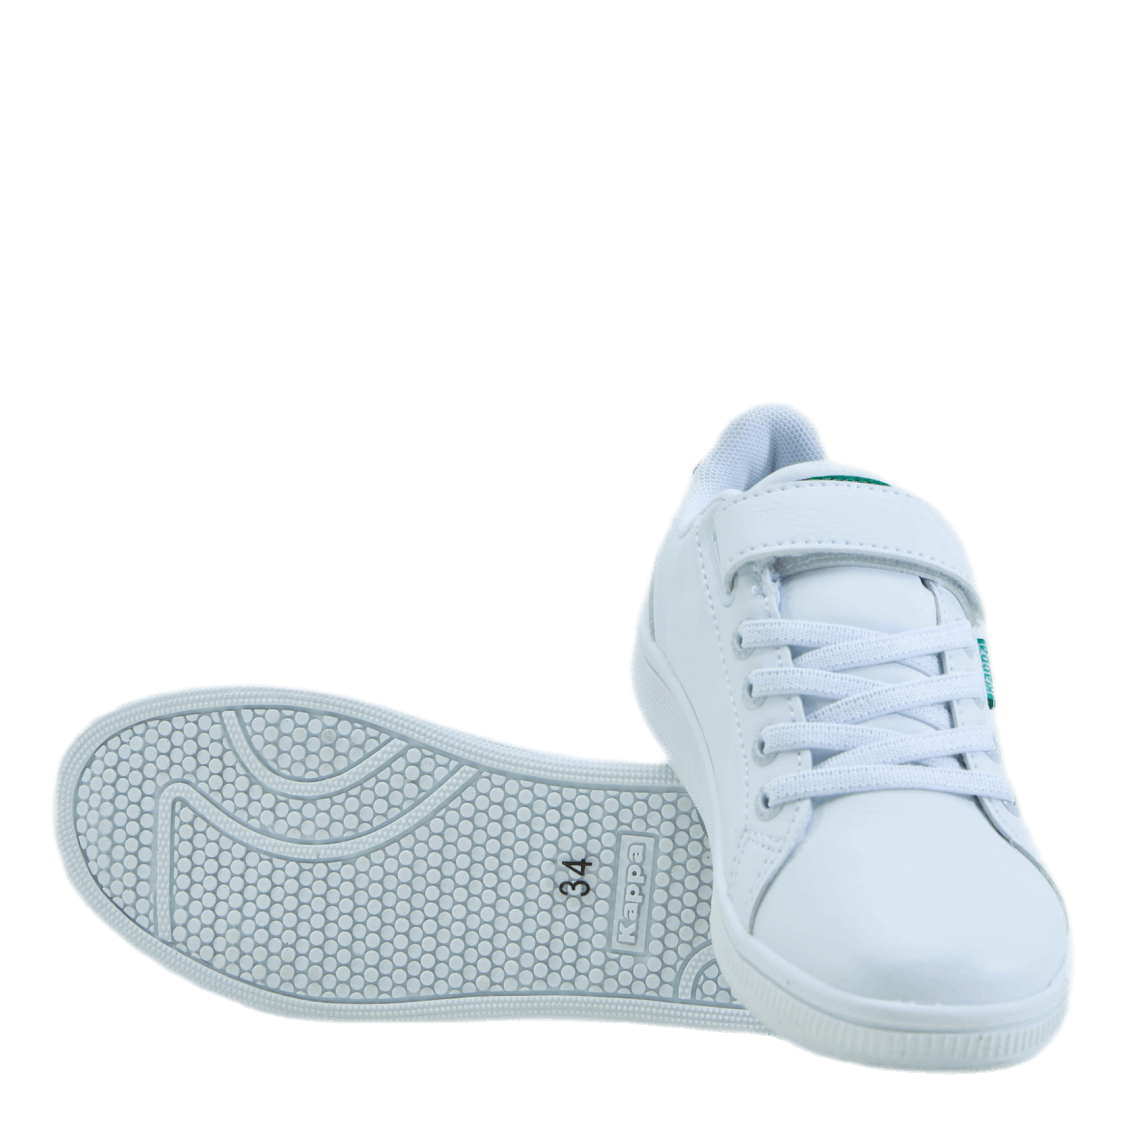 Jr. Sneakers, Zoomy White/Green